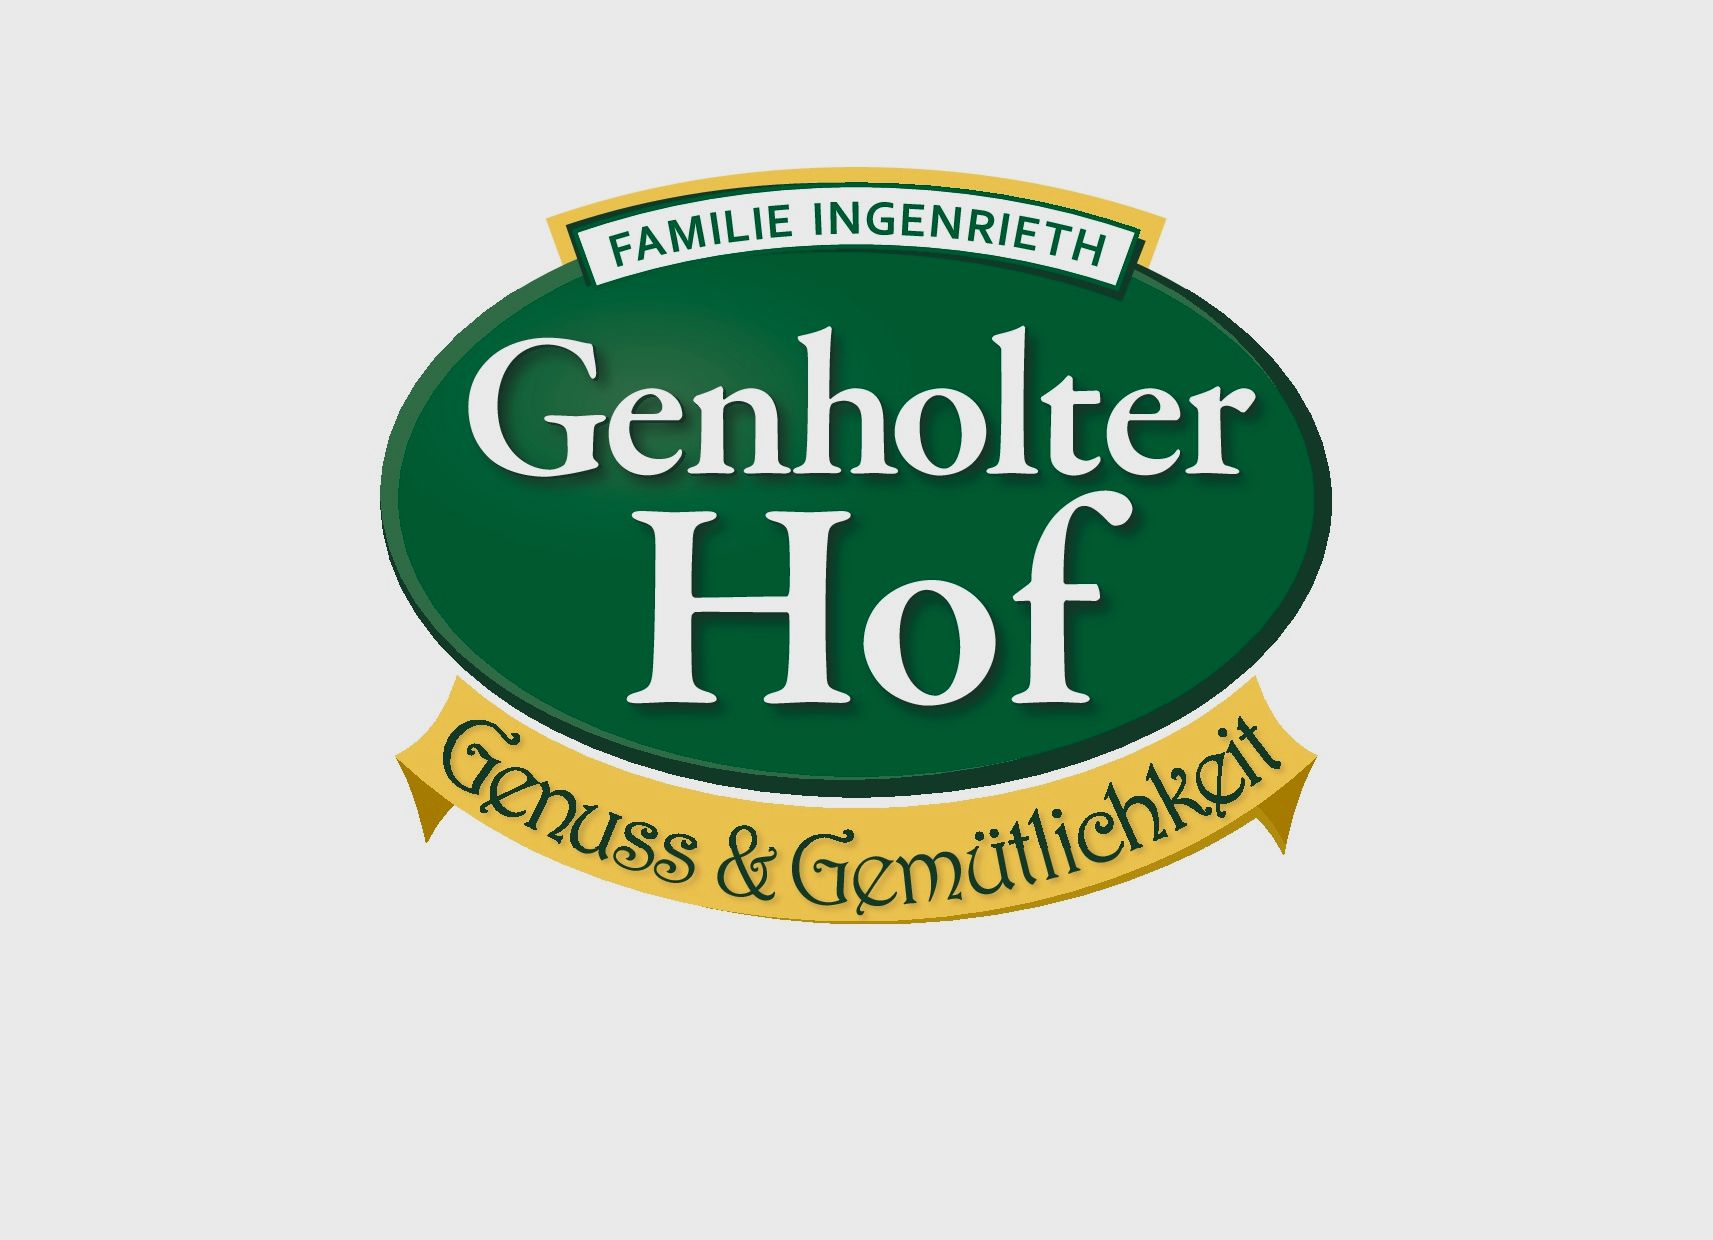 Genholter Hof